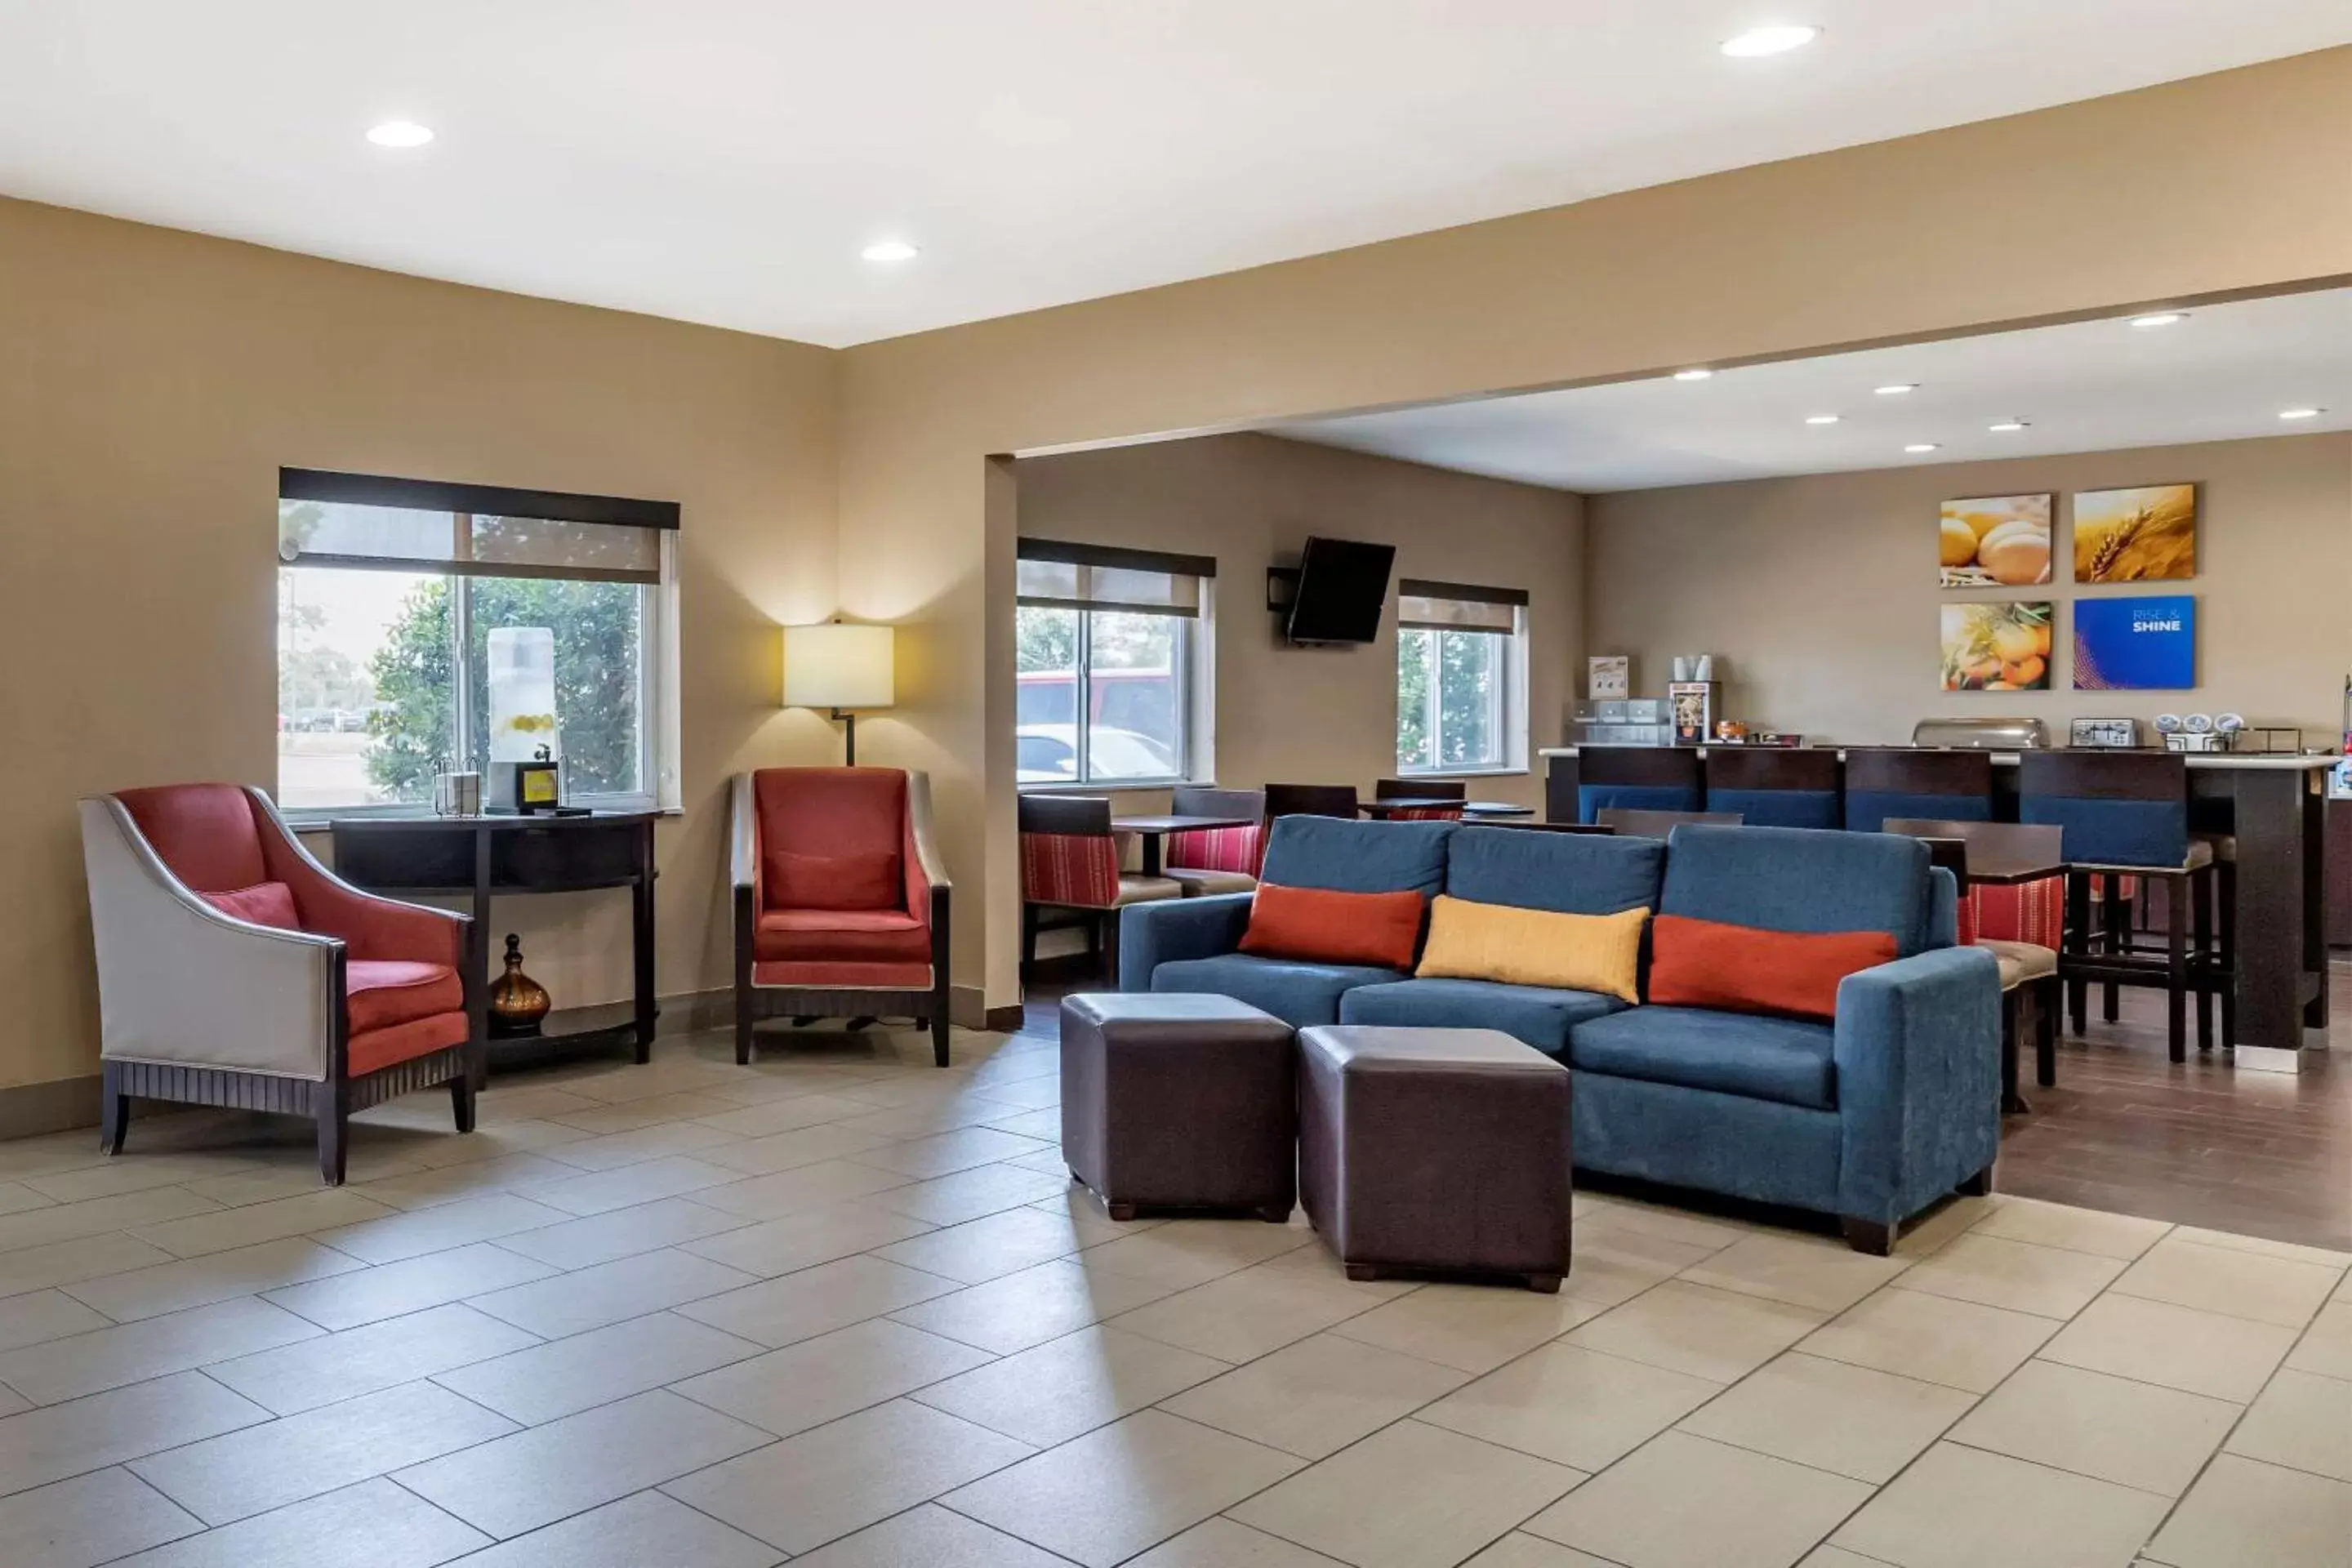 Lobby or reception in Comfort Inn Oklahoma City